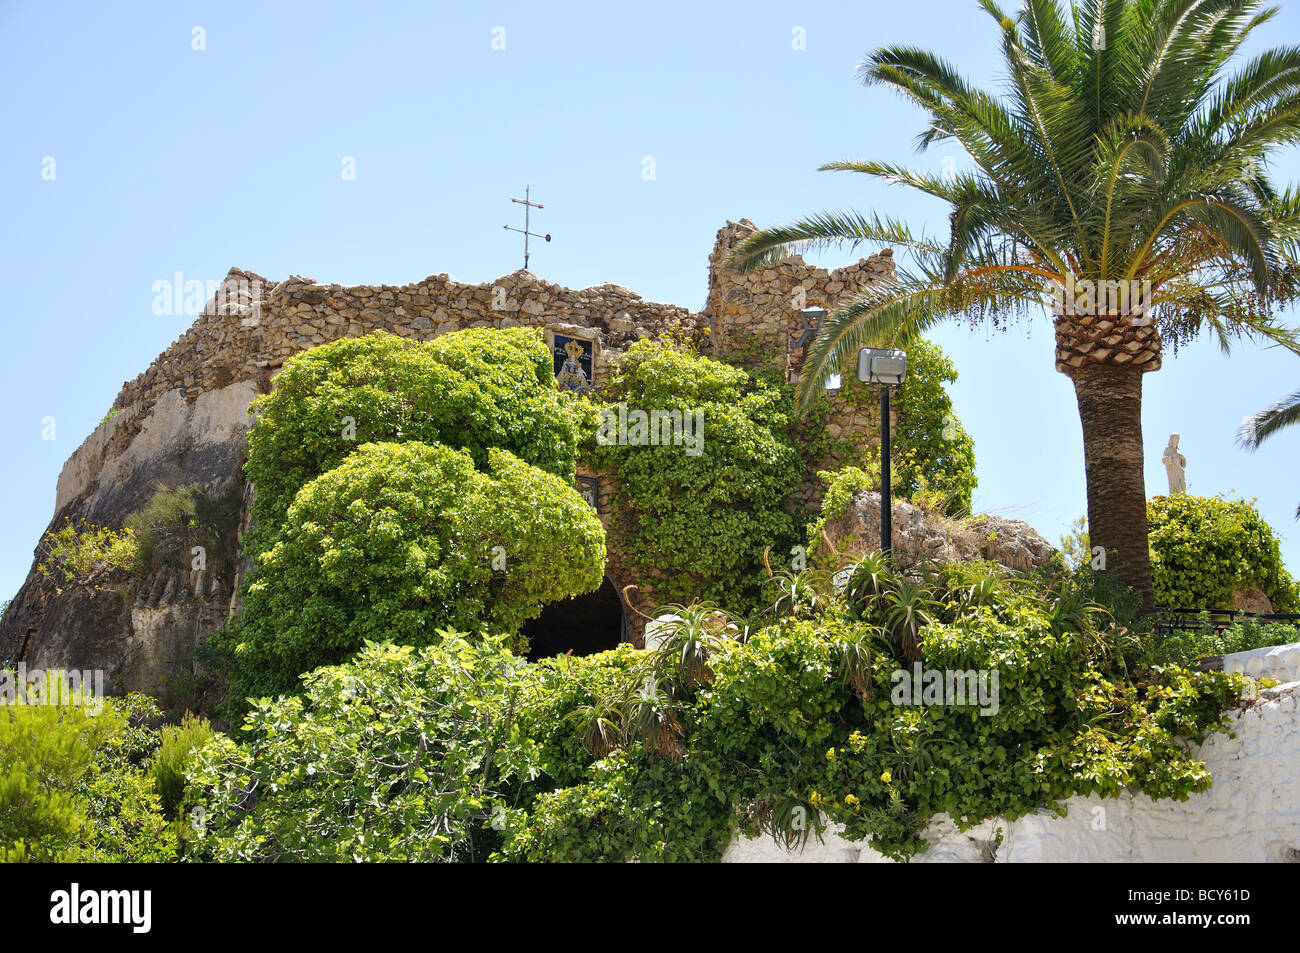 Santuario de la Virgen de la Pena Limosnas, Mijas, Costa del sol, Malaga province, Andalousie (Andalousie), Espagne Banque D'Images